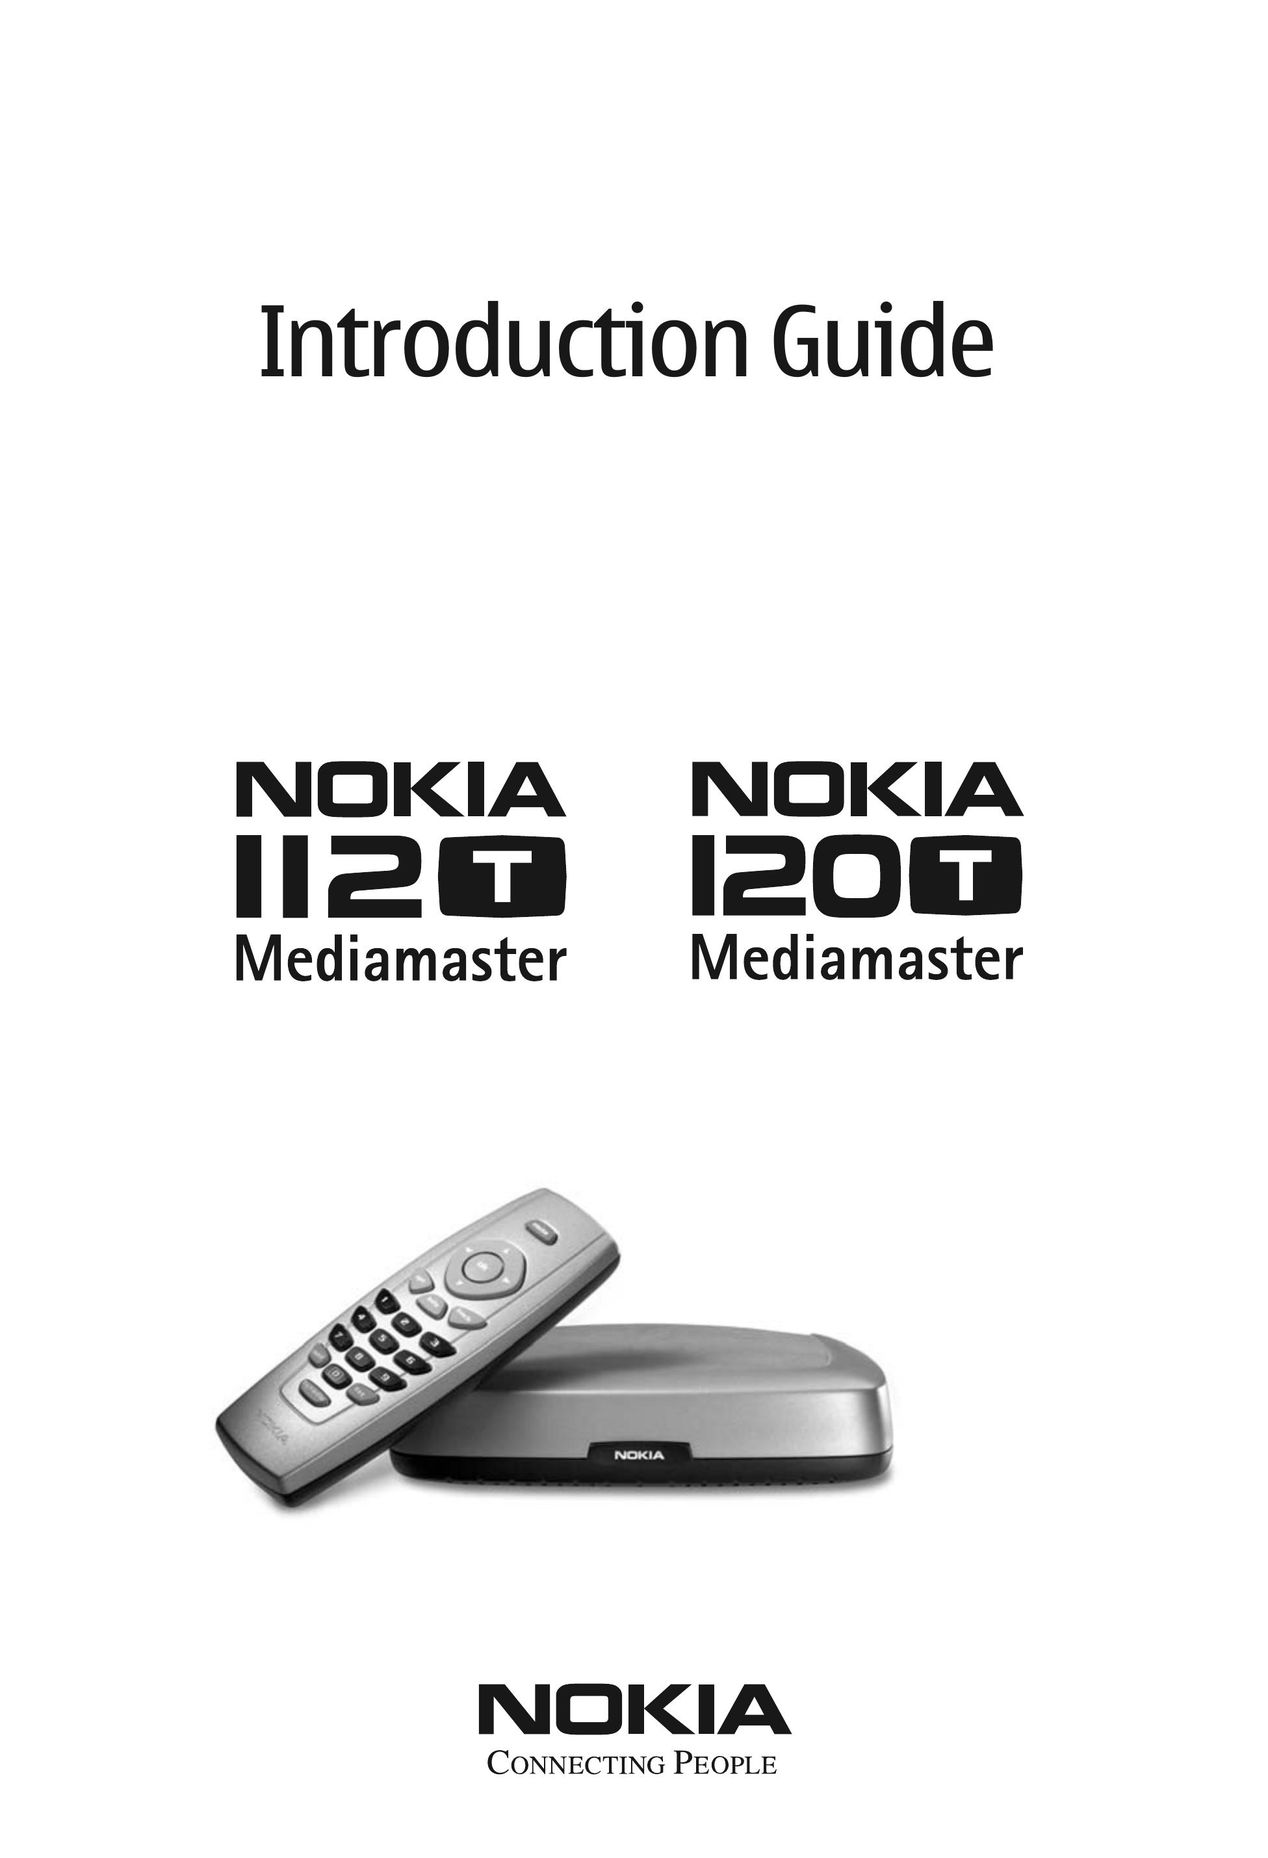 Nokia 112T Satellite TV System User Manual